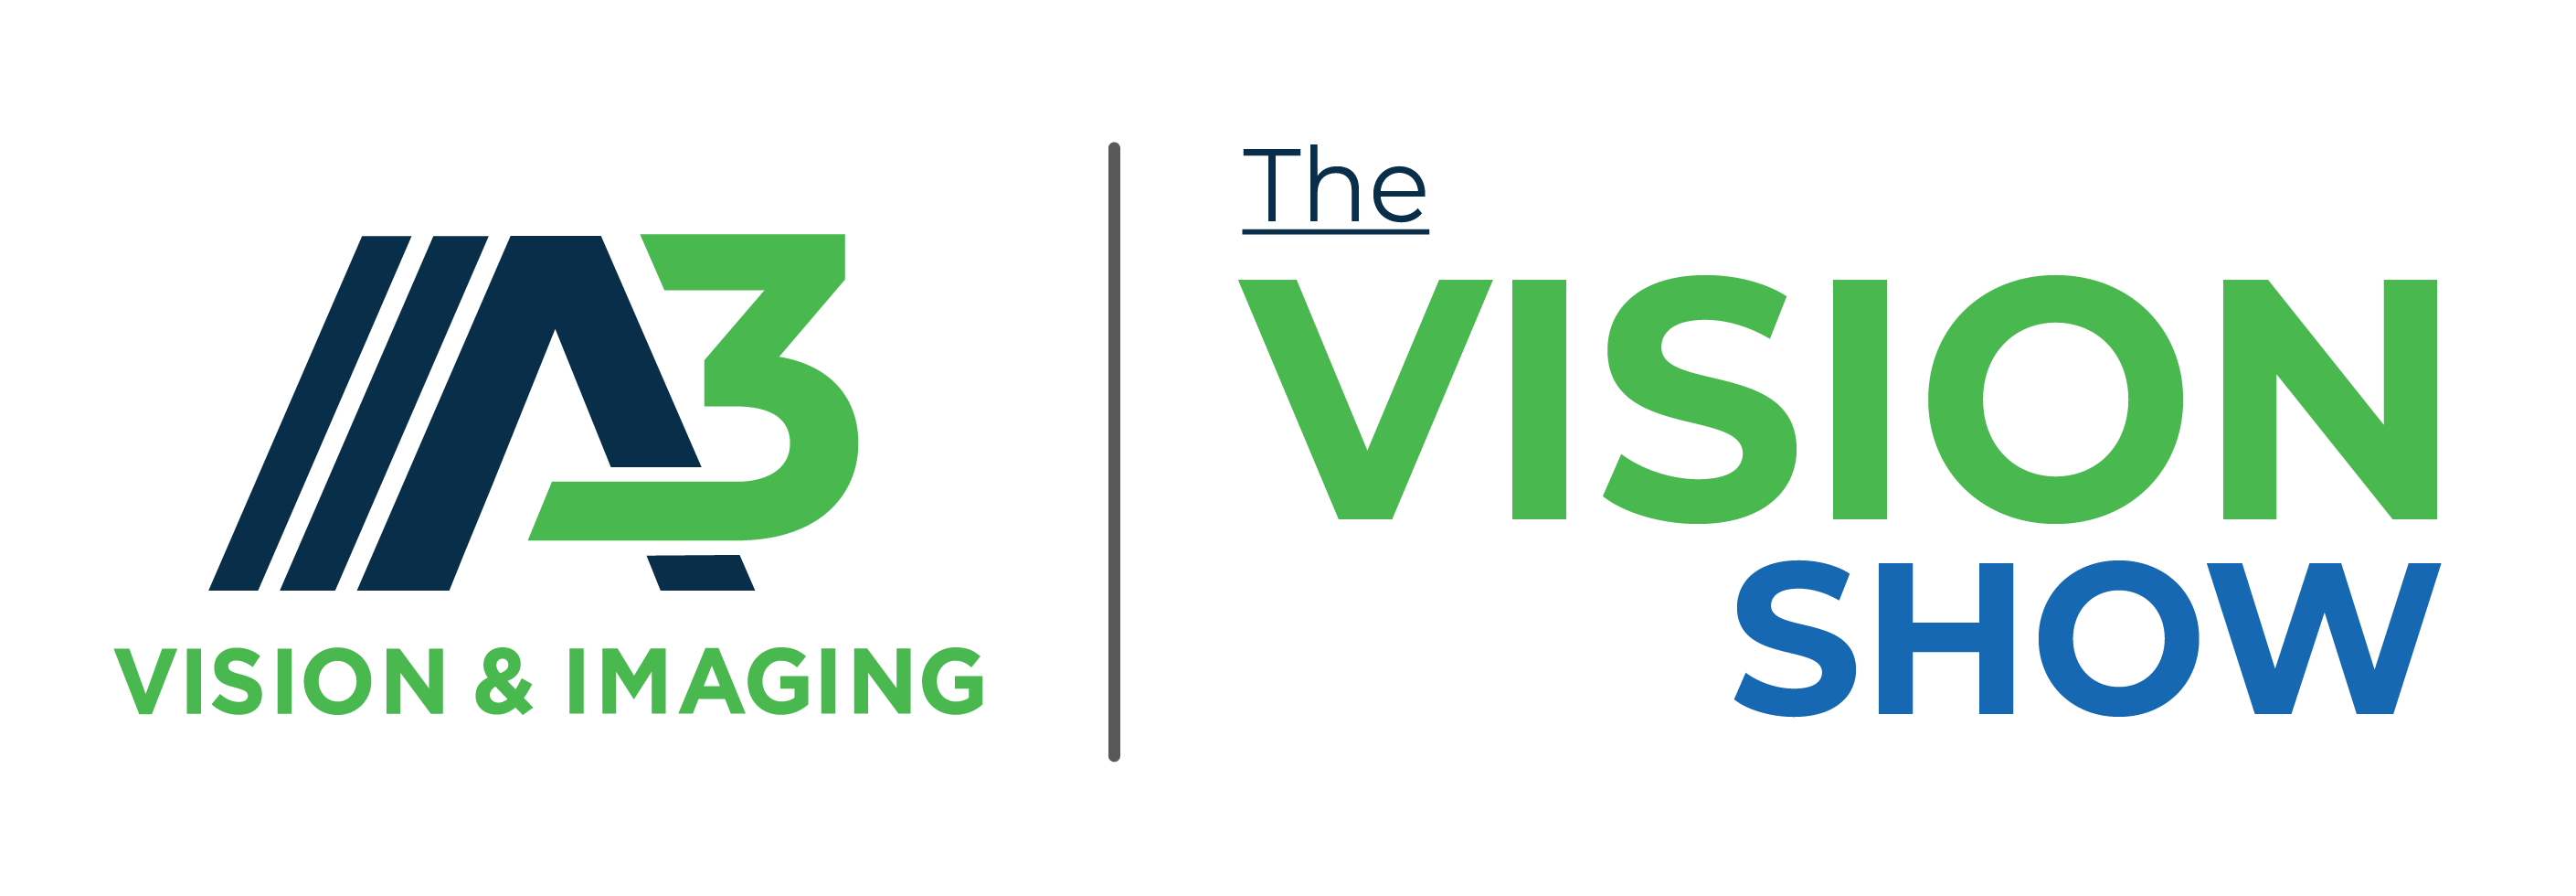 The Vision Show logo